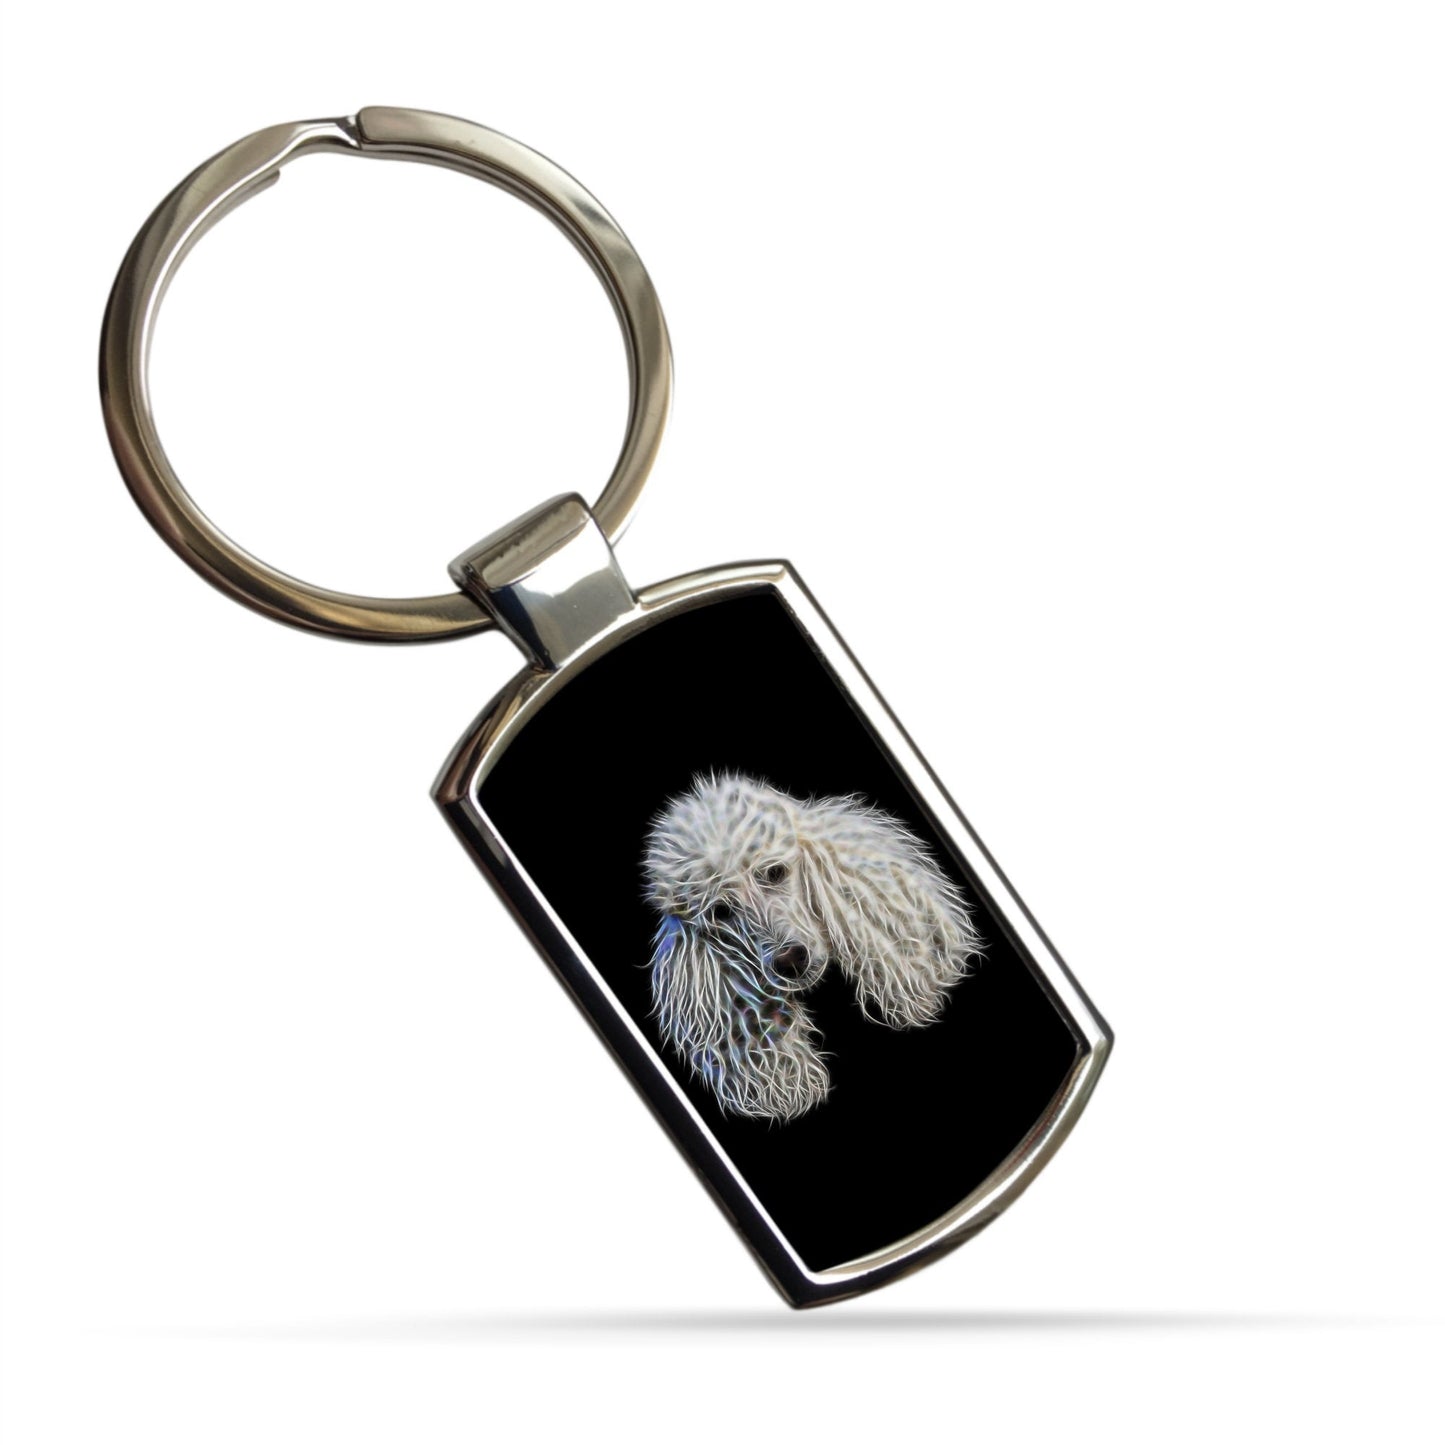 White Standard Poodle Keychain with Fractal Art Design.